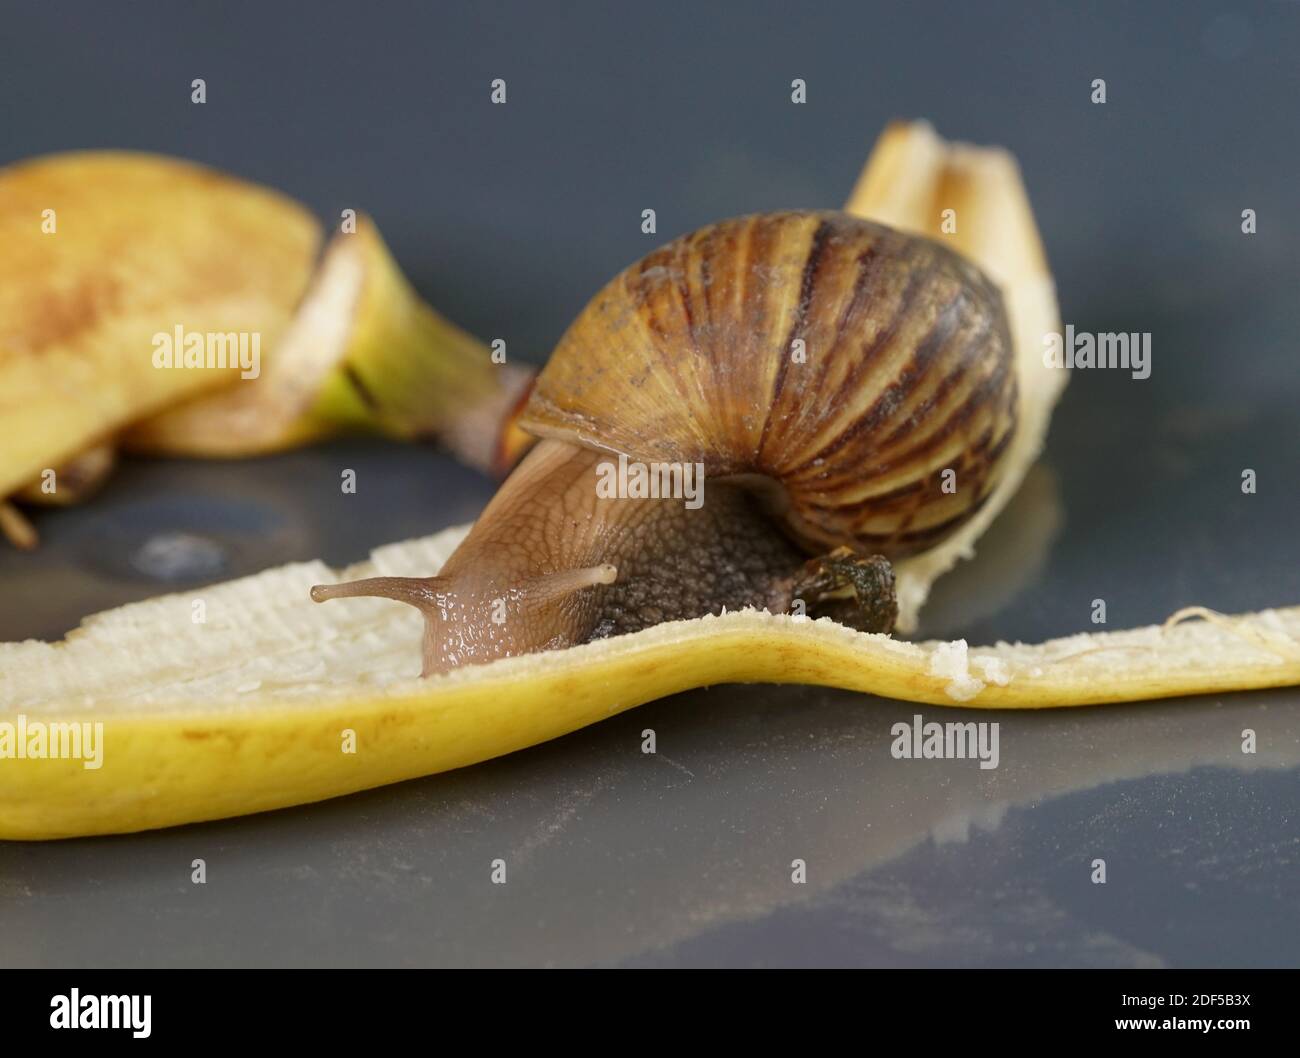 A snail was eating a banana peel like happy. Stock Photo